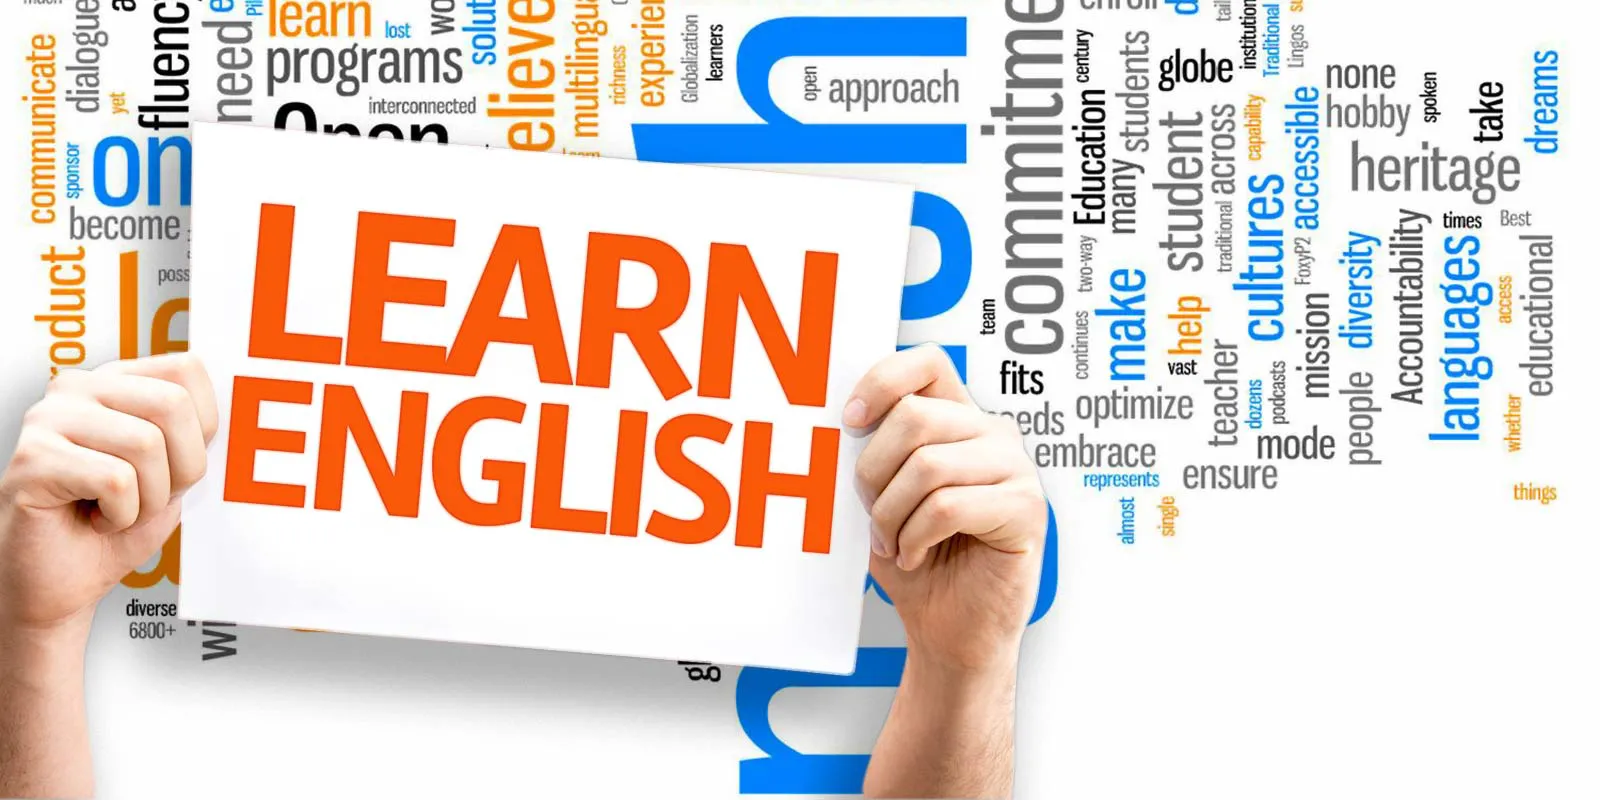 Advanced English Grammar & Composition Course